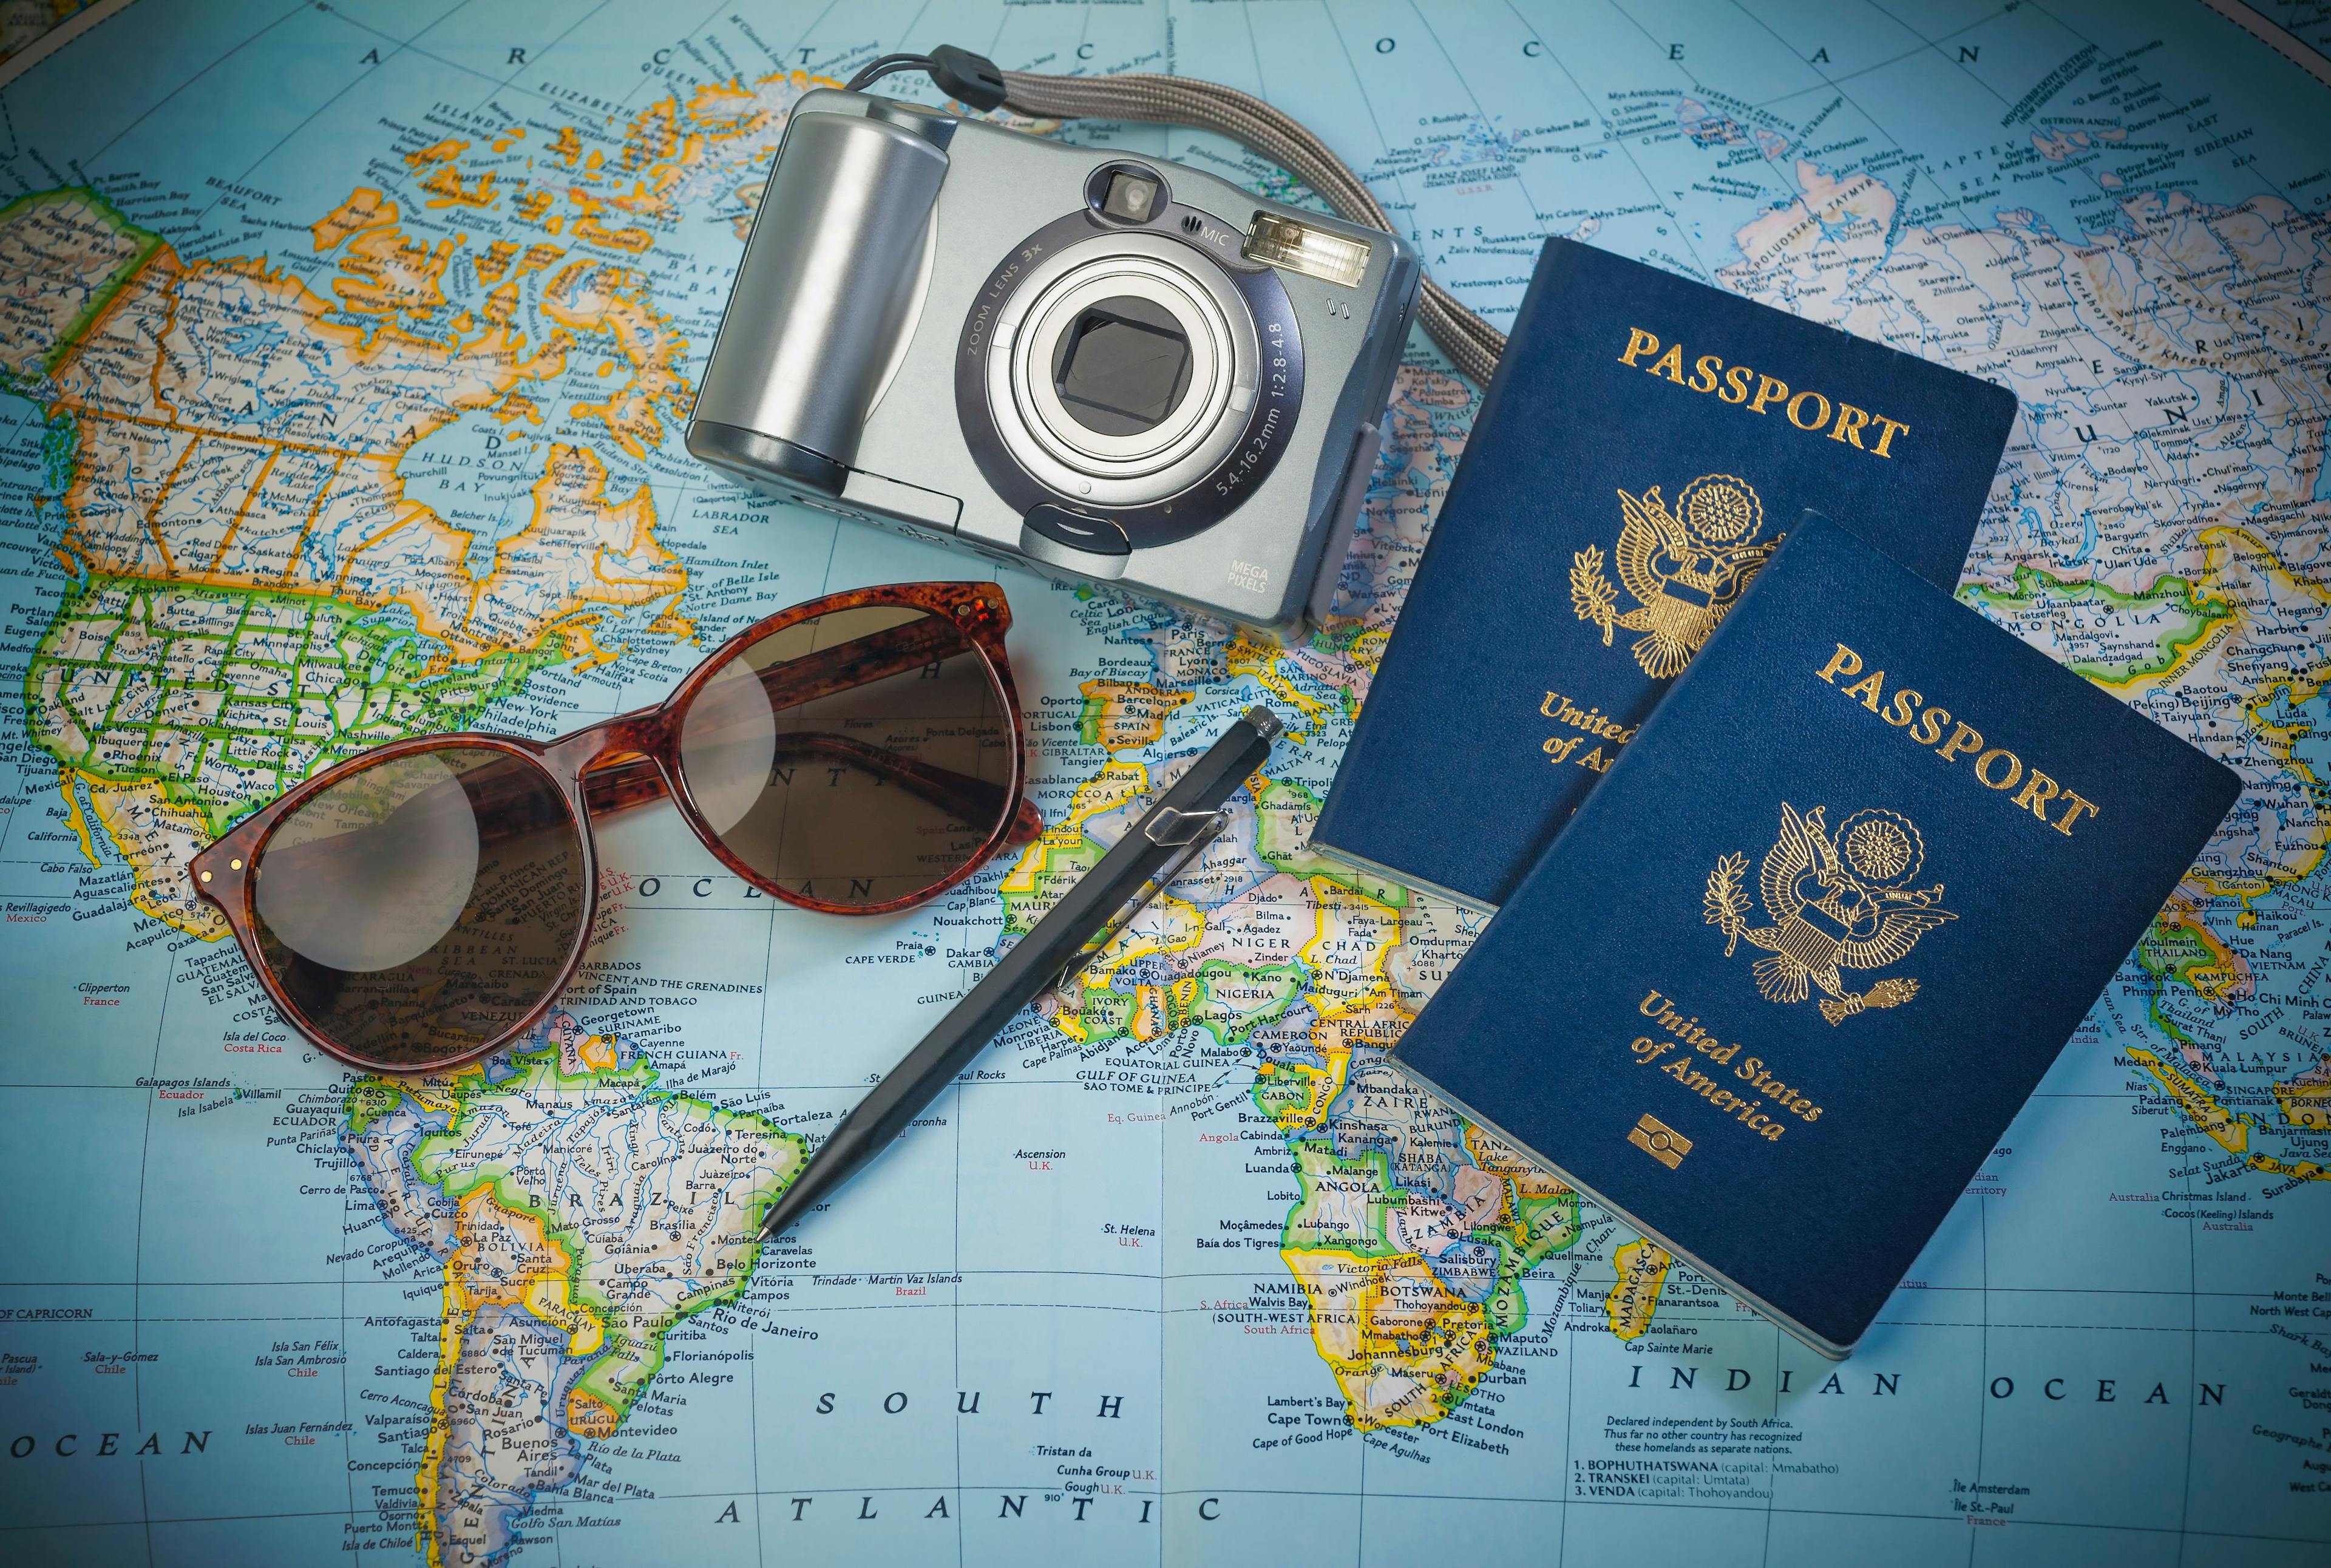 Passports to world travel | Image credit: Christian Delbert - stock.adobe.com